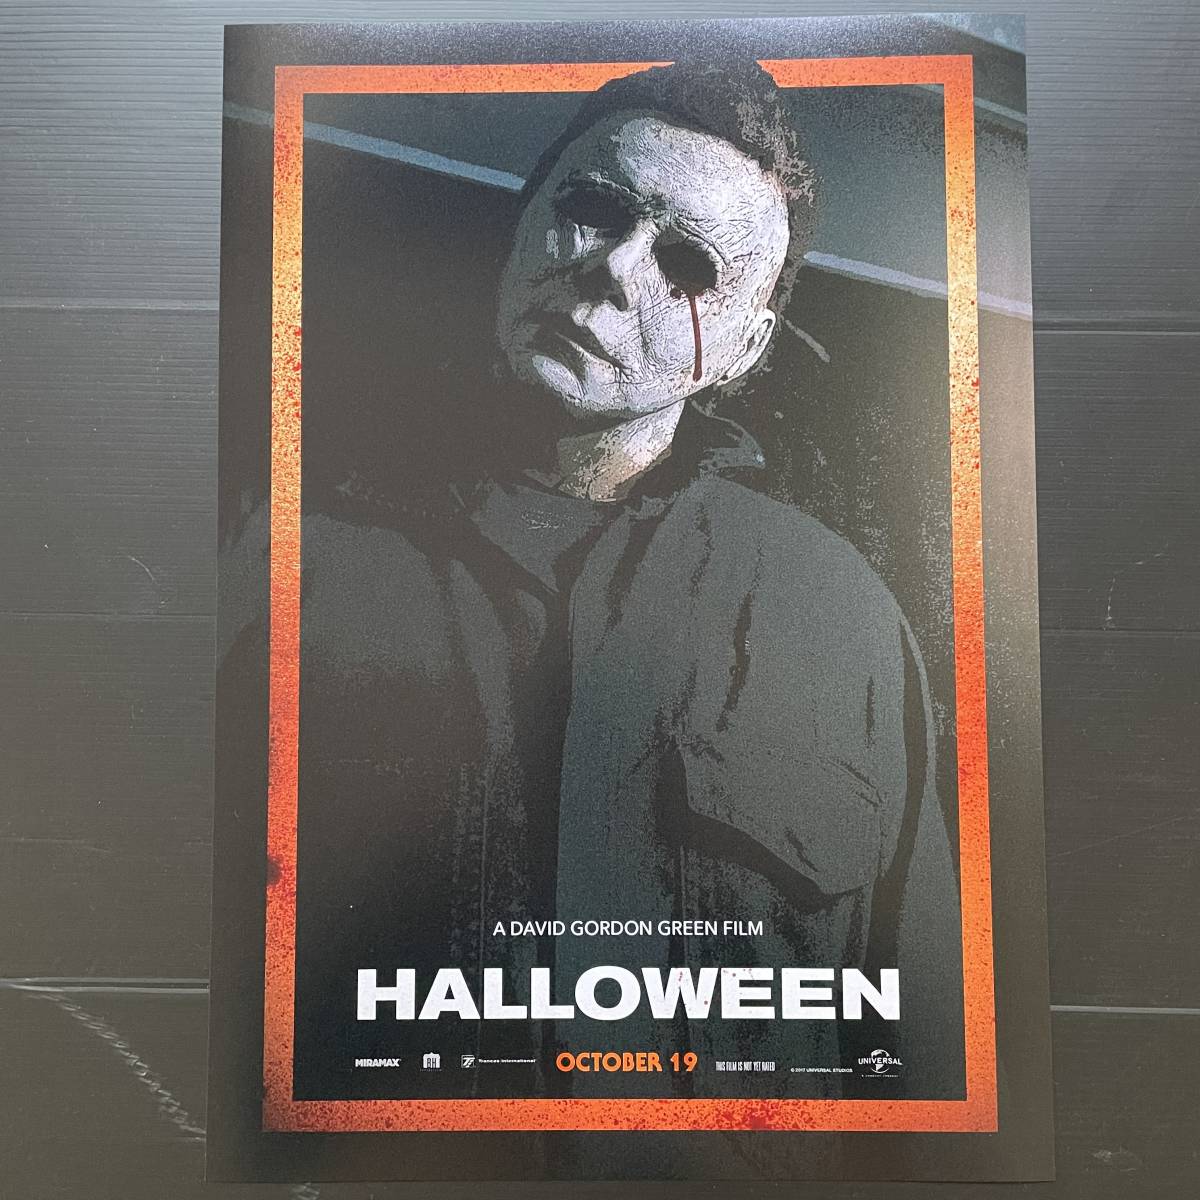  overseas edition poster [ Halloween ](Halloween)2018 year version #2* John * carpe nta-/ boogie man / Michael *ma year z